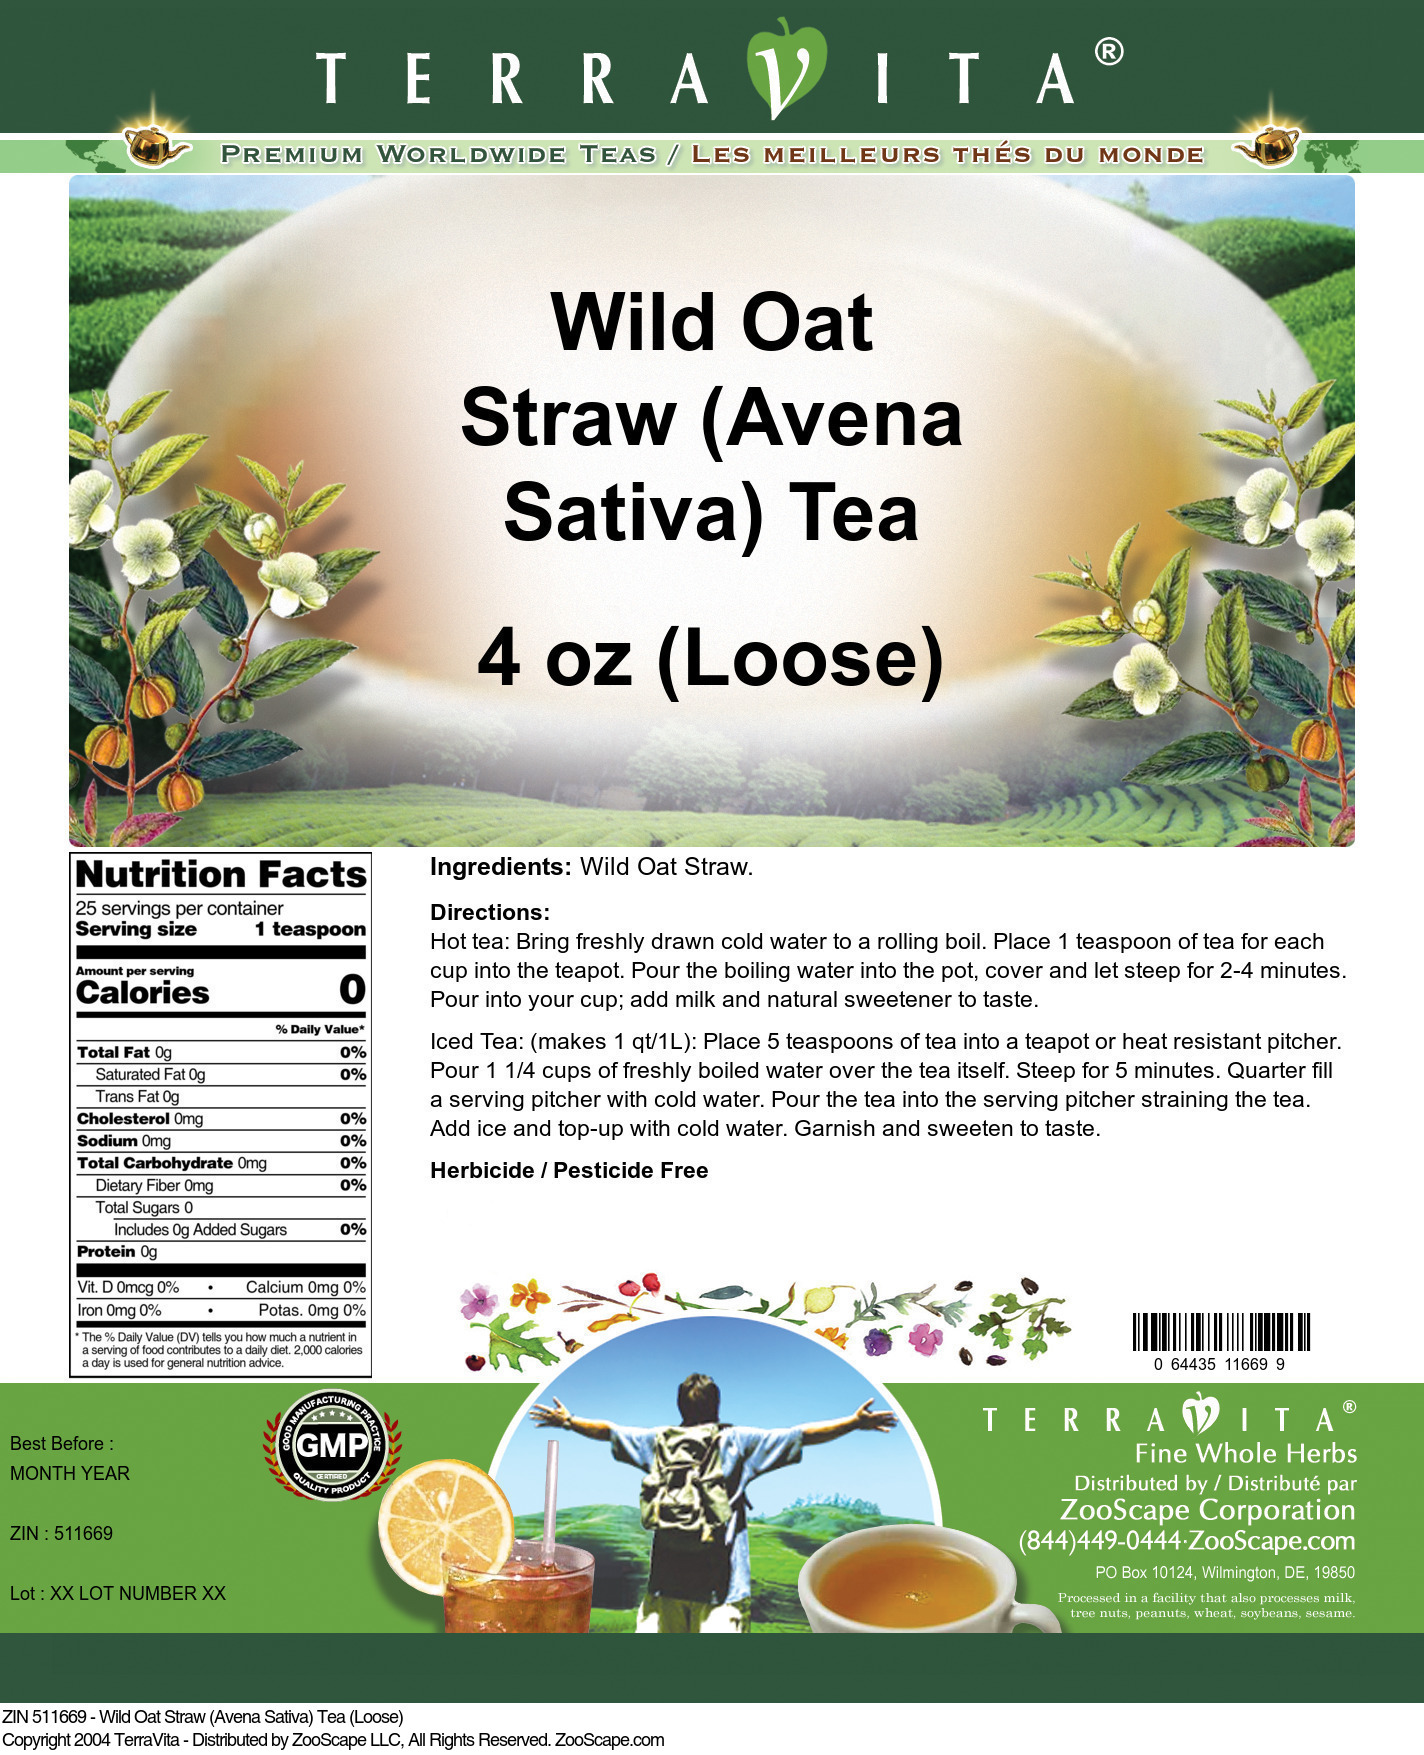 Wild Oat Straw (Avena Sativa) Tea (Loose) - Label